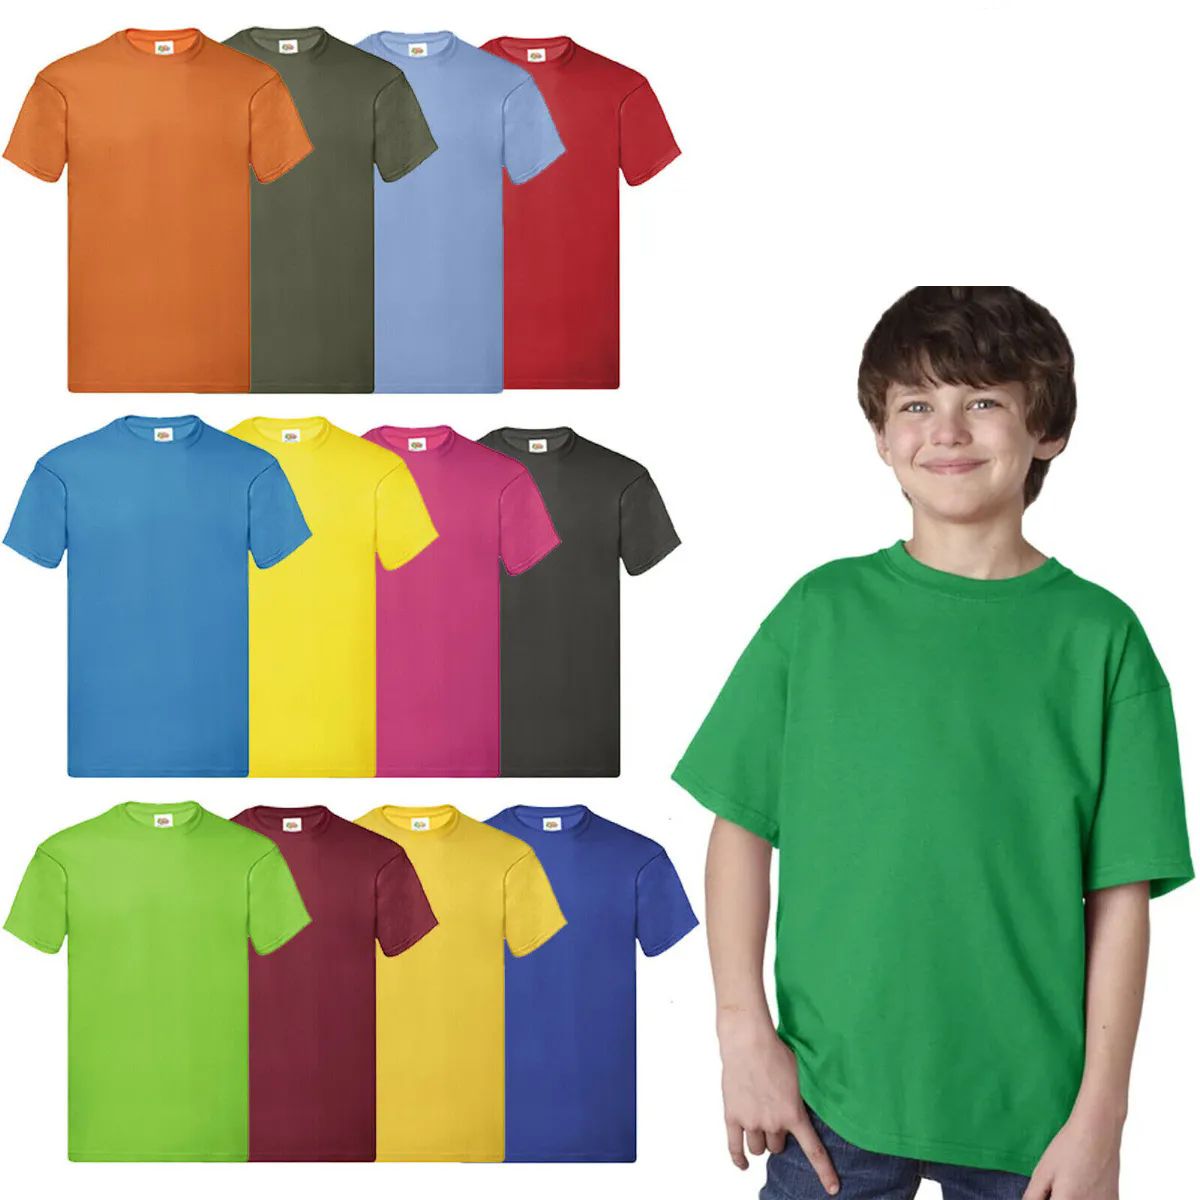 432 Bulk Billion Hats Kids Youth Cotton Assorted Colors T Shirts Size S